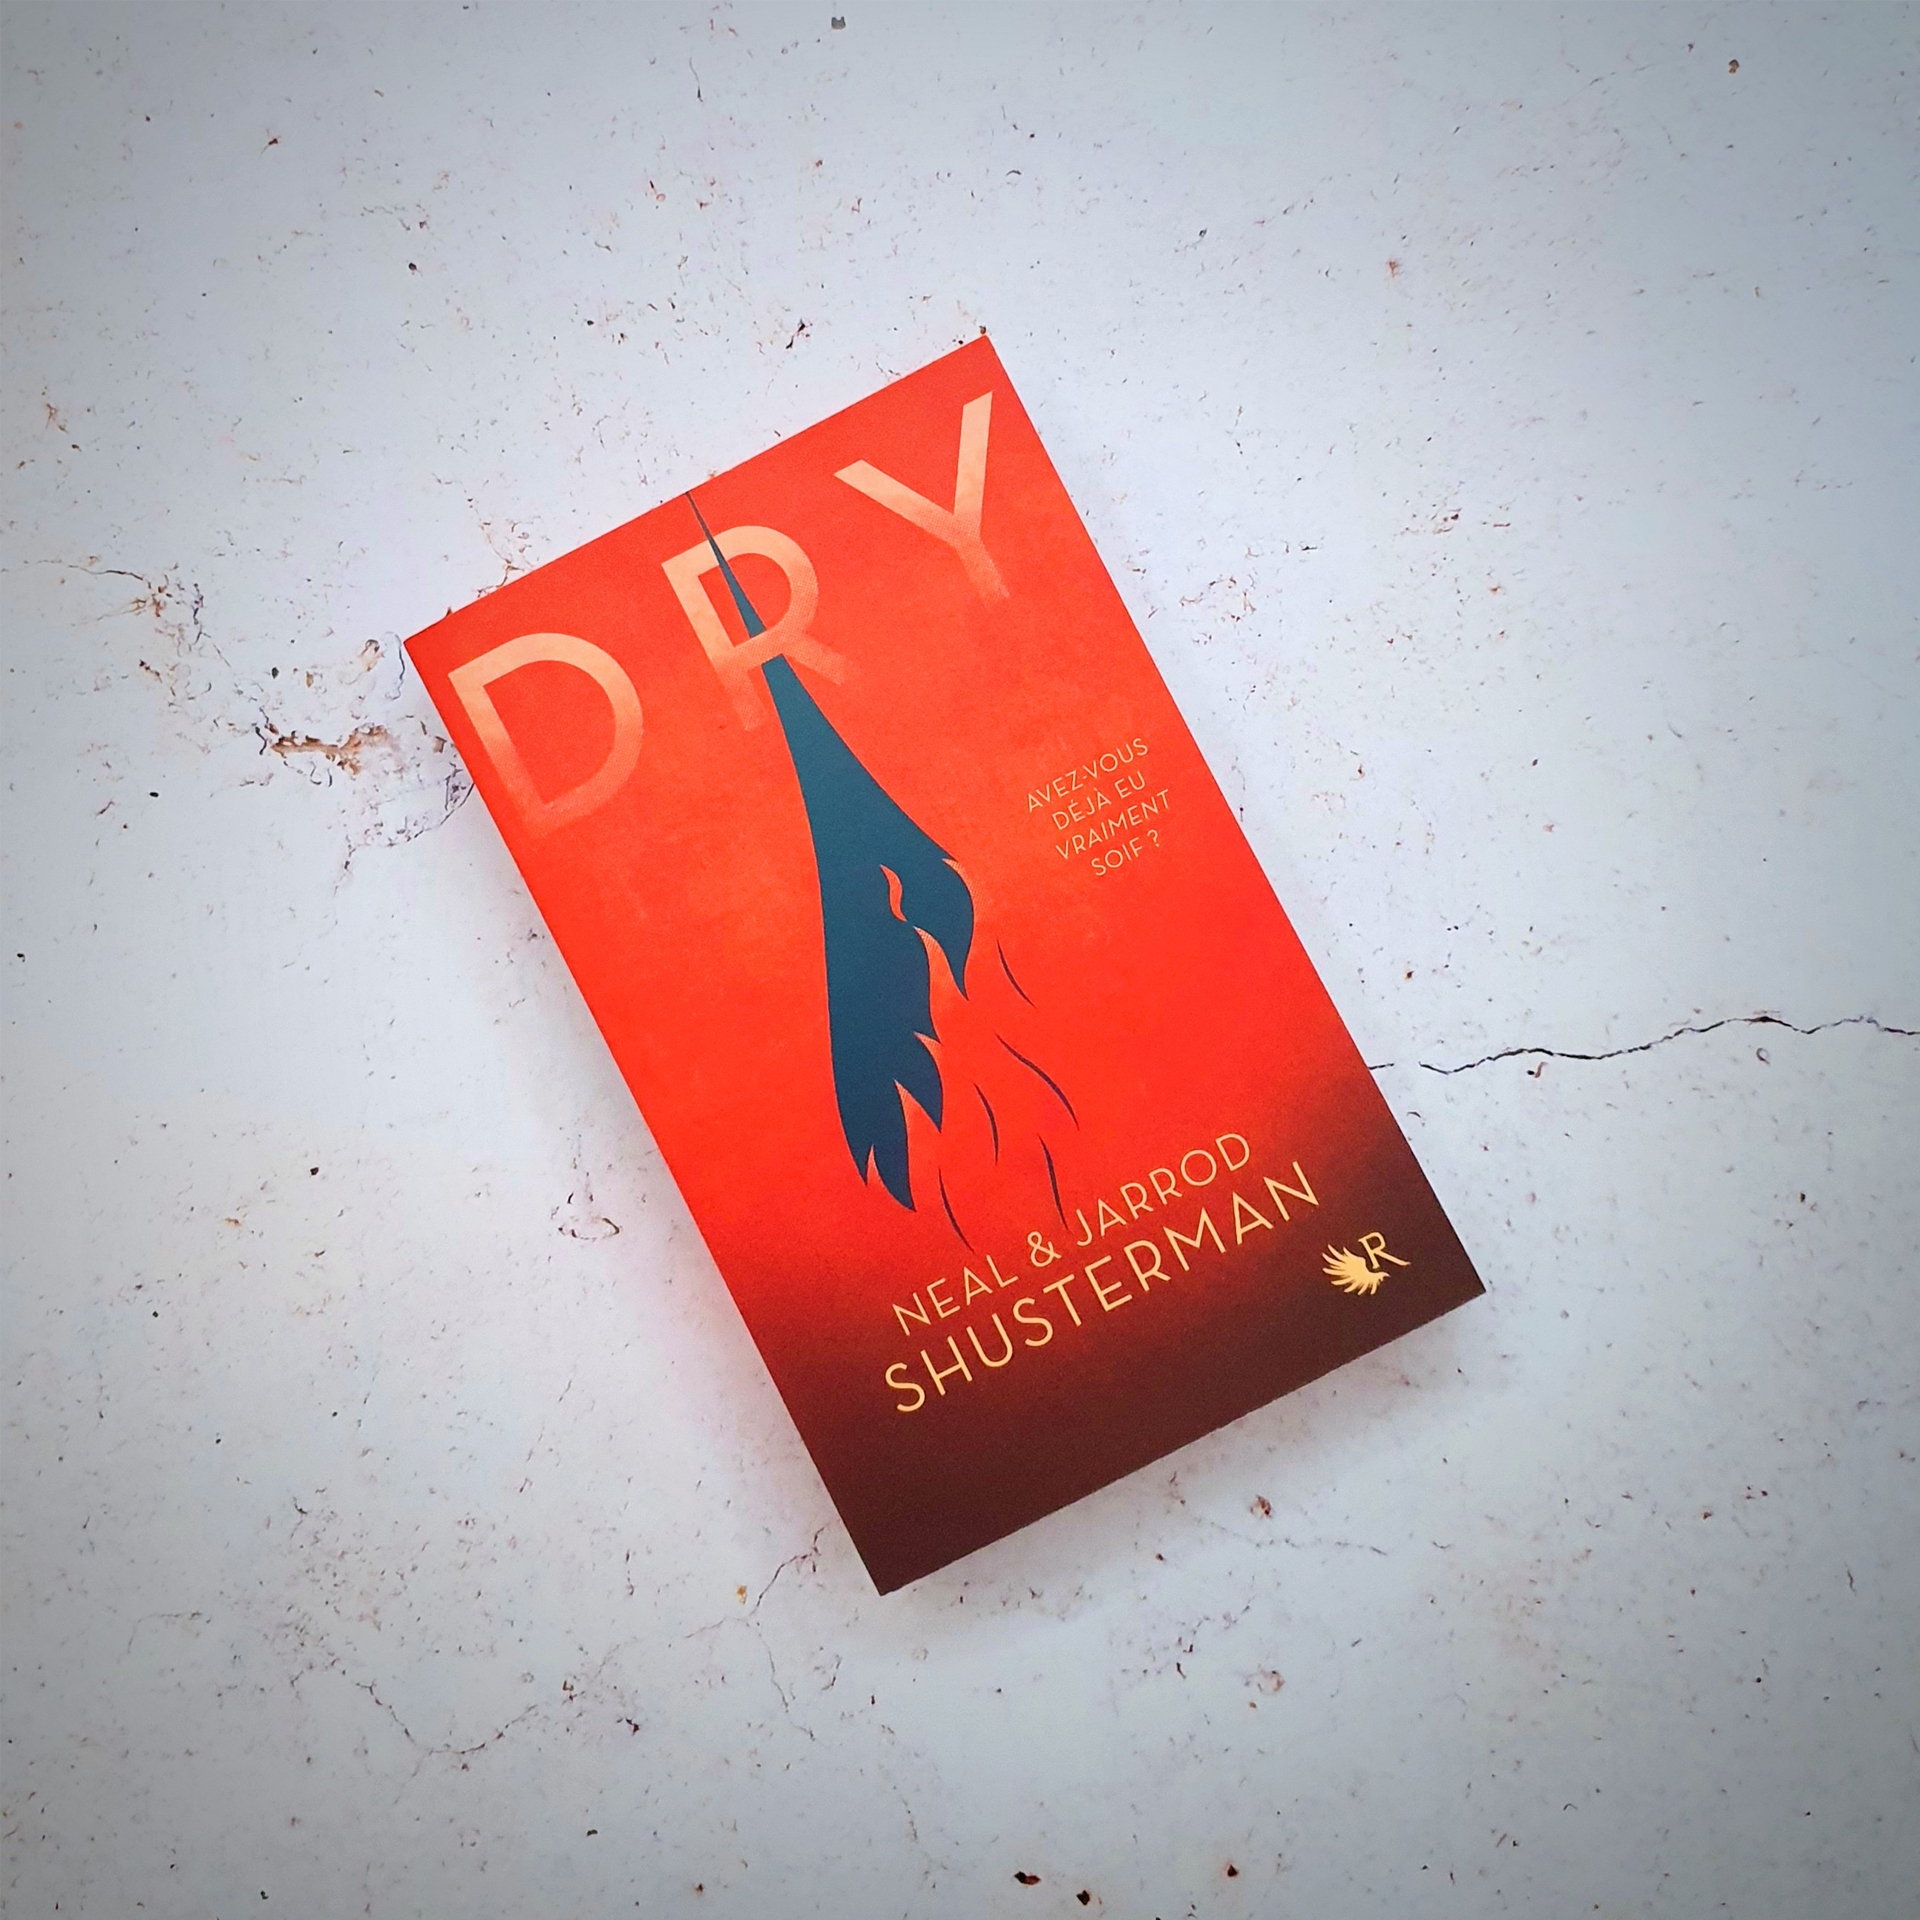 Dry - Neal & Jarrod Shusterman